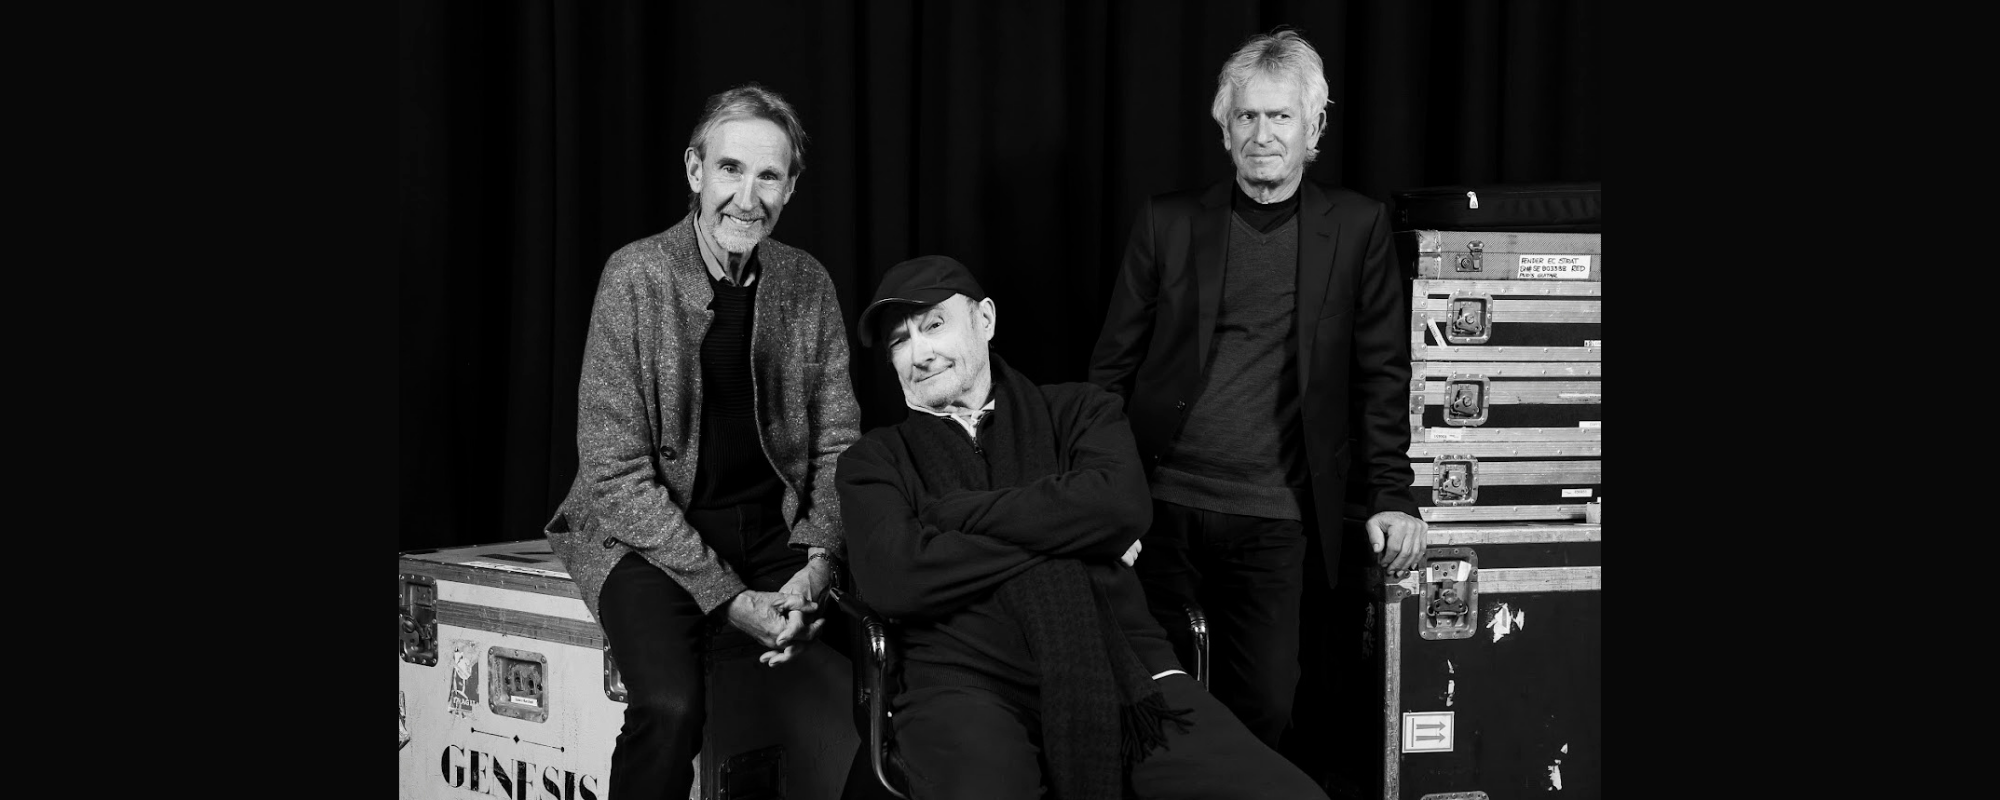 Phil Collins Confirms Genesis 2021 Reunion Run Will Be Their Farewell Tour